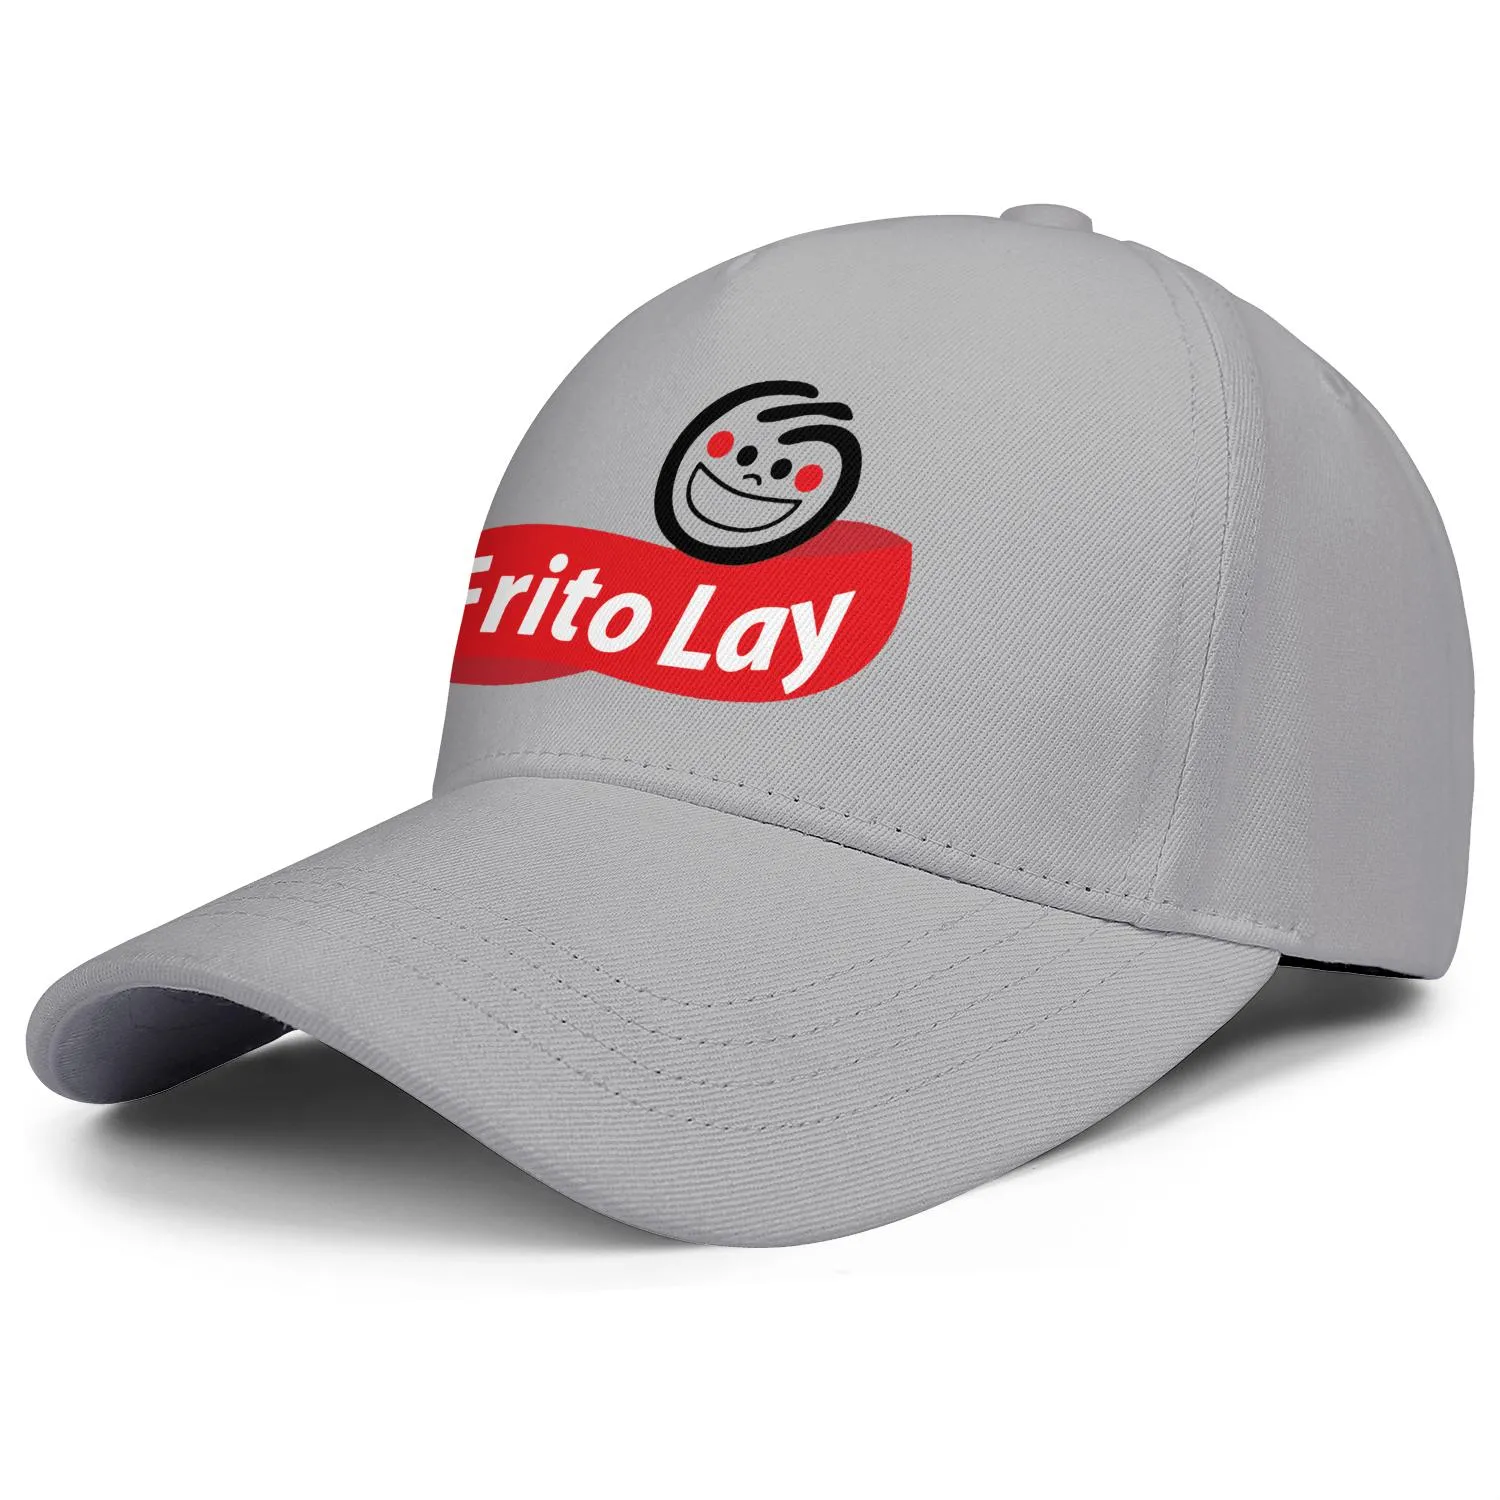 Fritos-Lays mens and womens adjustable trucker cap design blank personalized trendy baseballhats logo Frito-Lay Potato Chips Frito303z